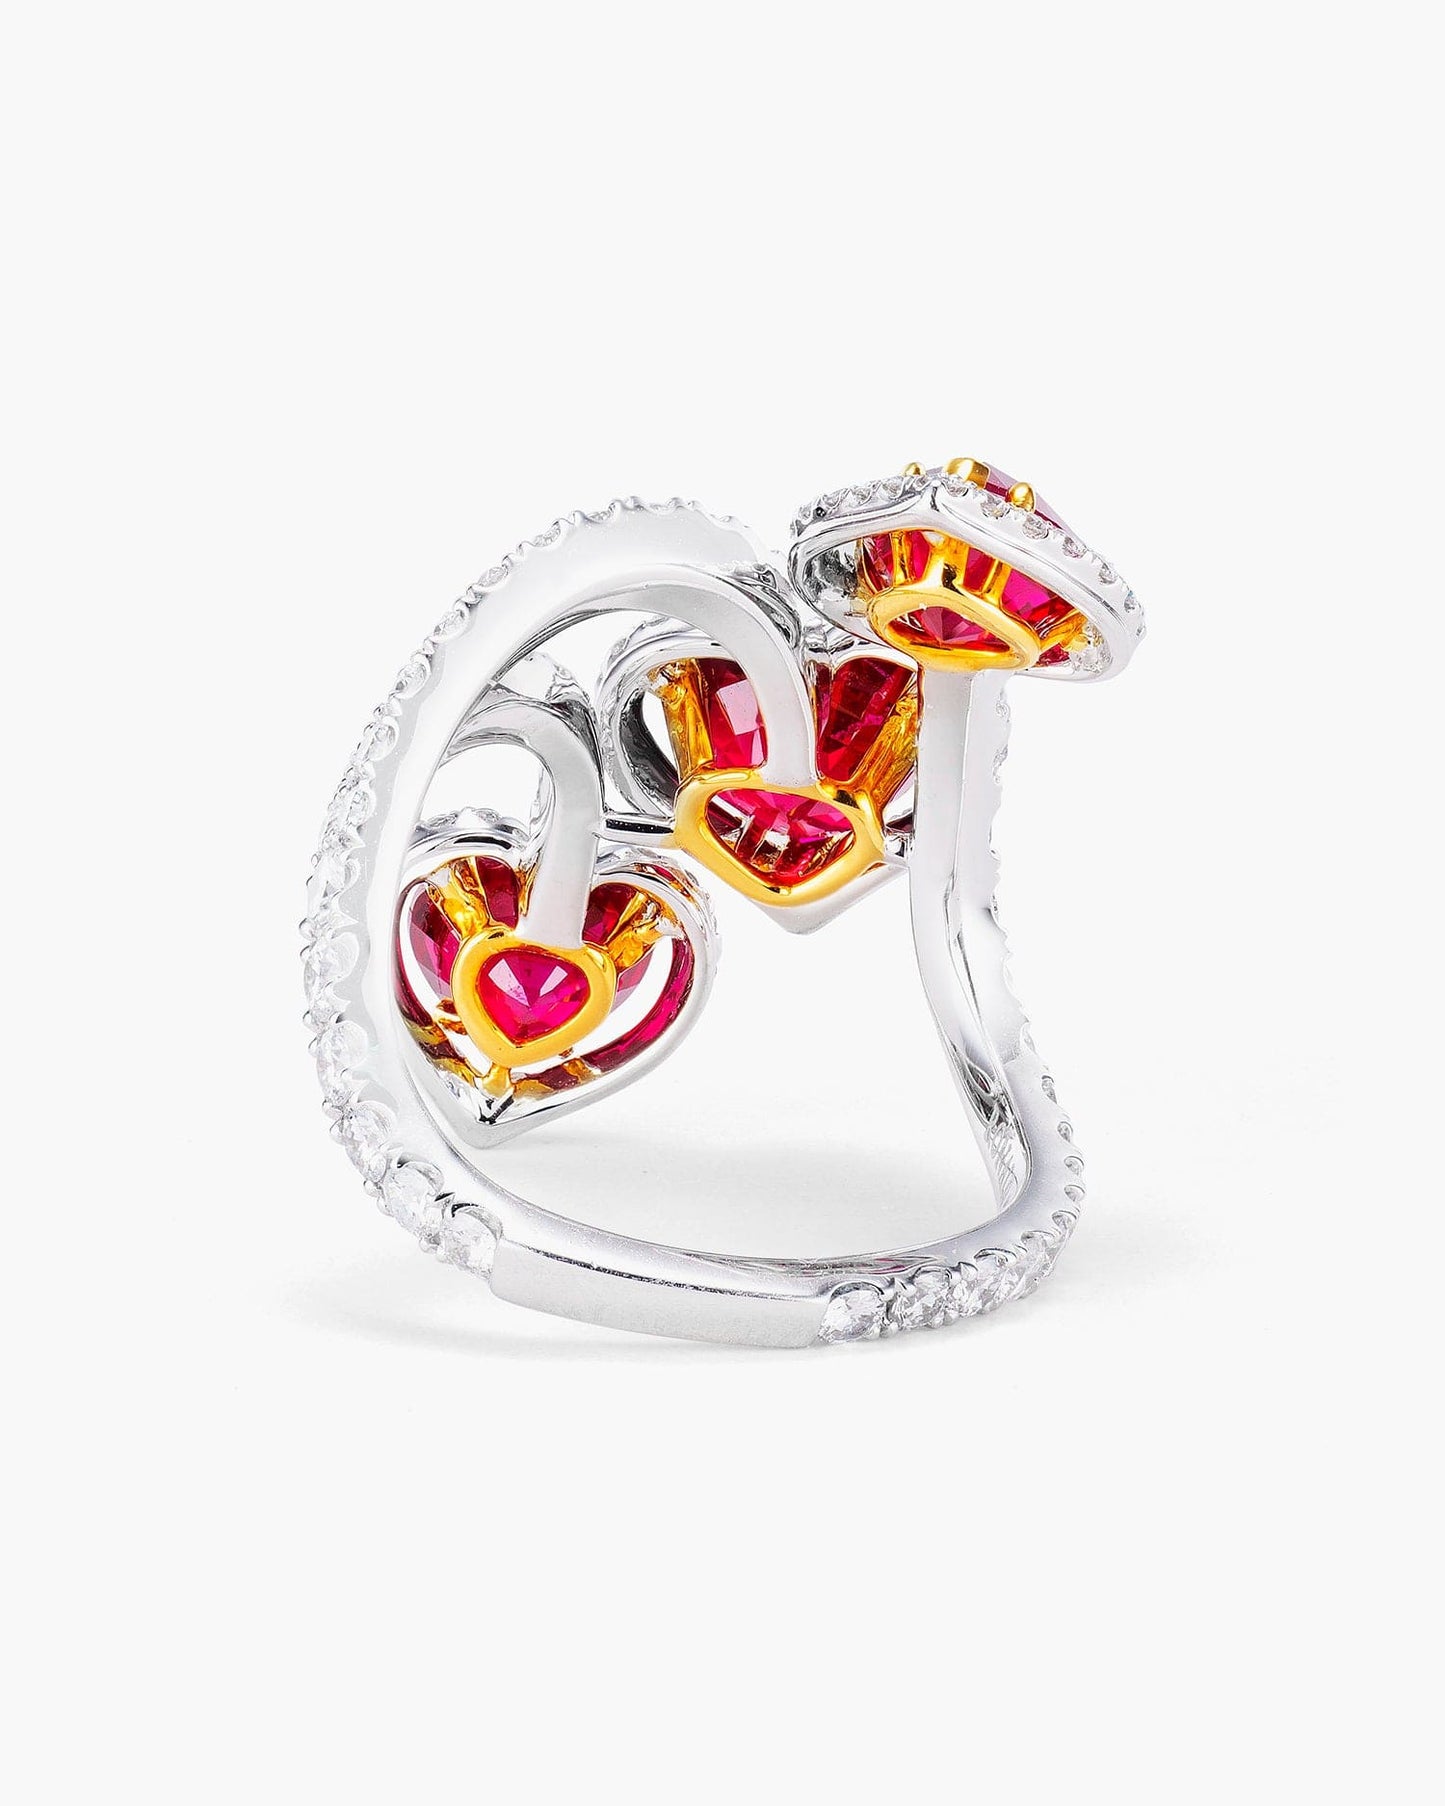 Three-Stone Heart Shape Burmese Ruby and Diamond Ring